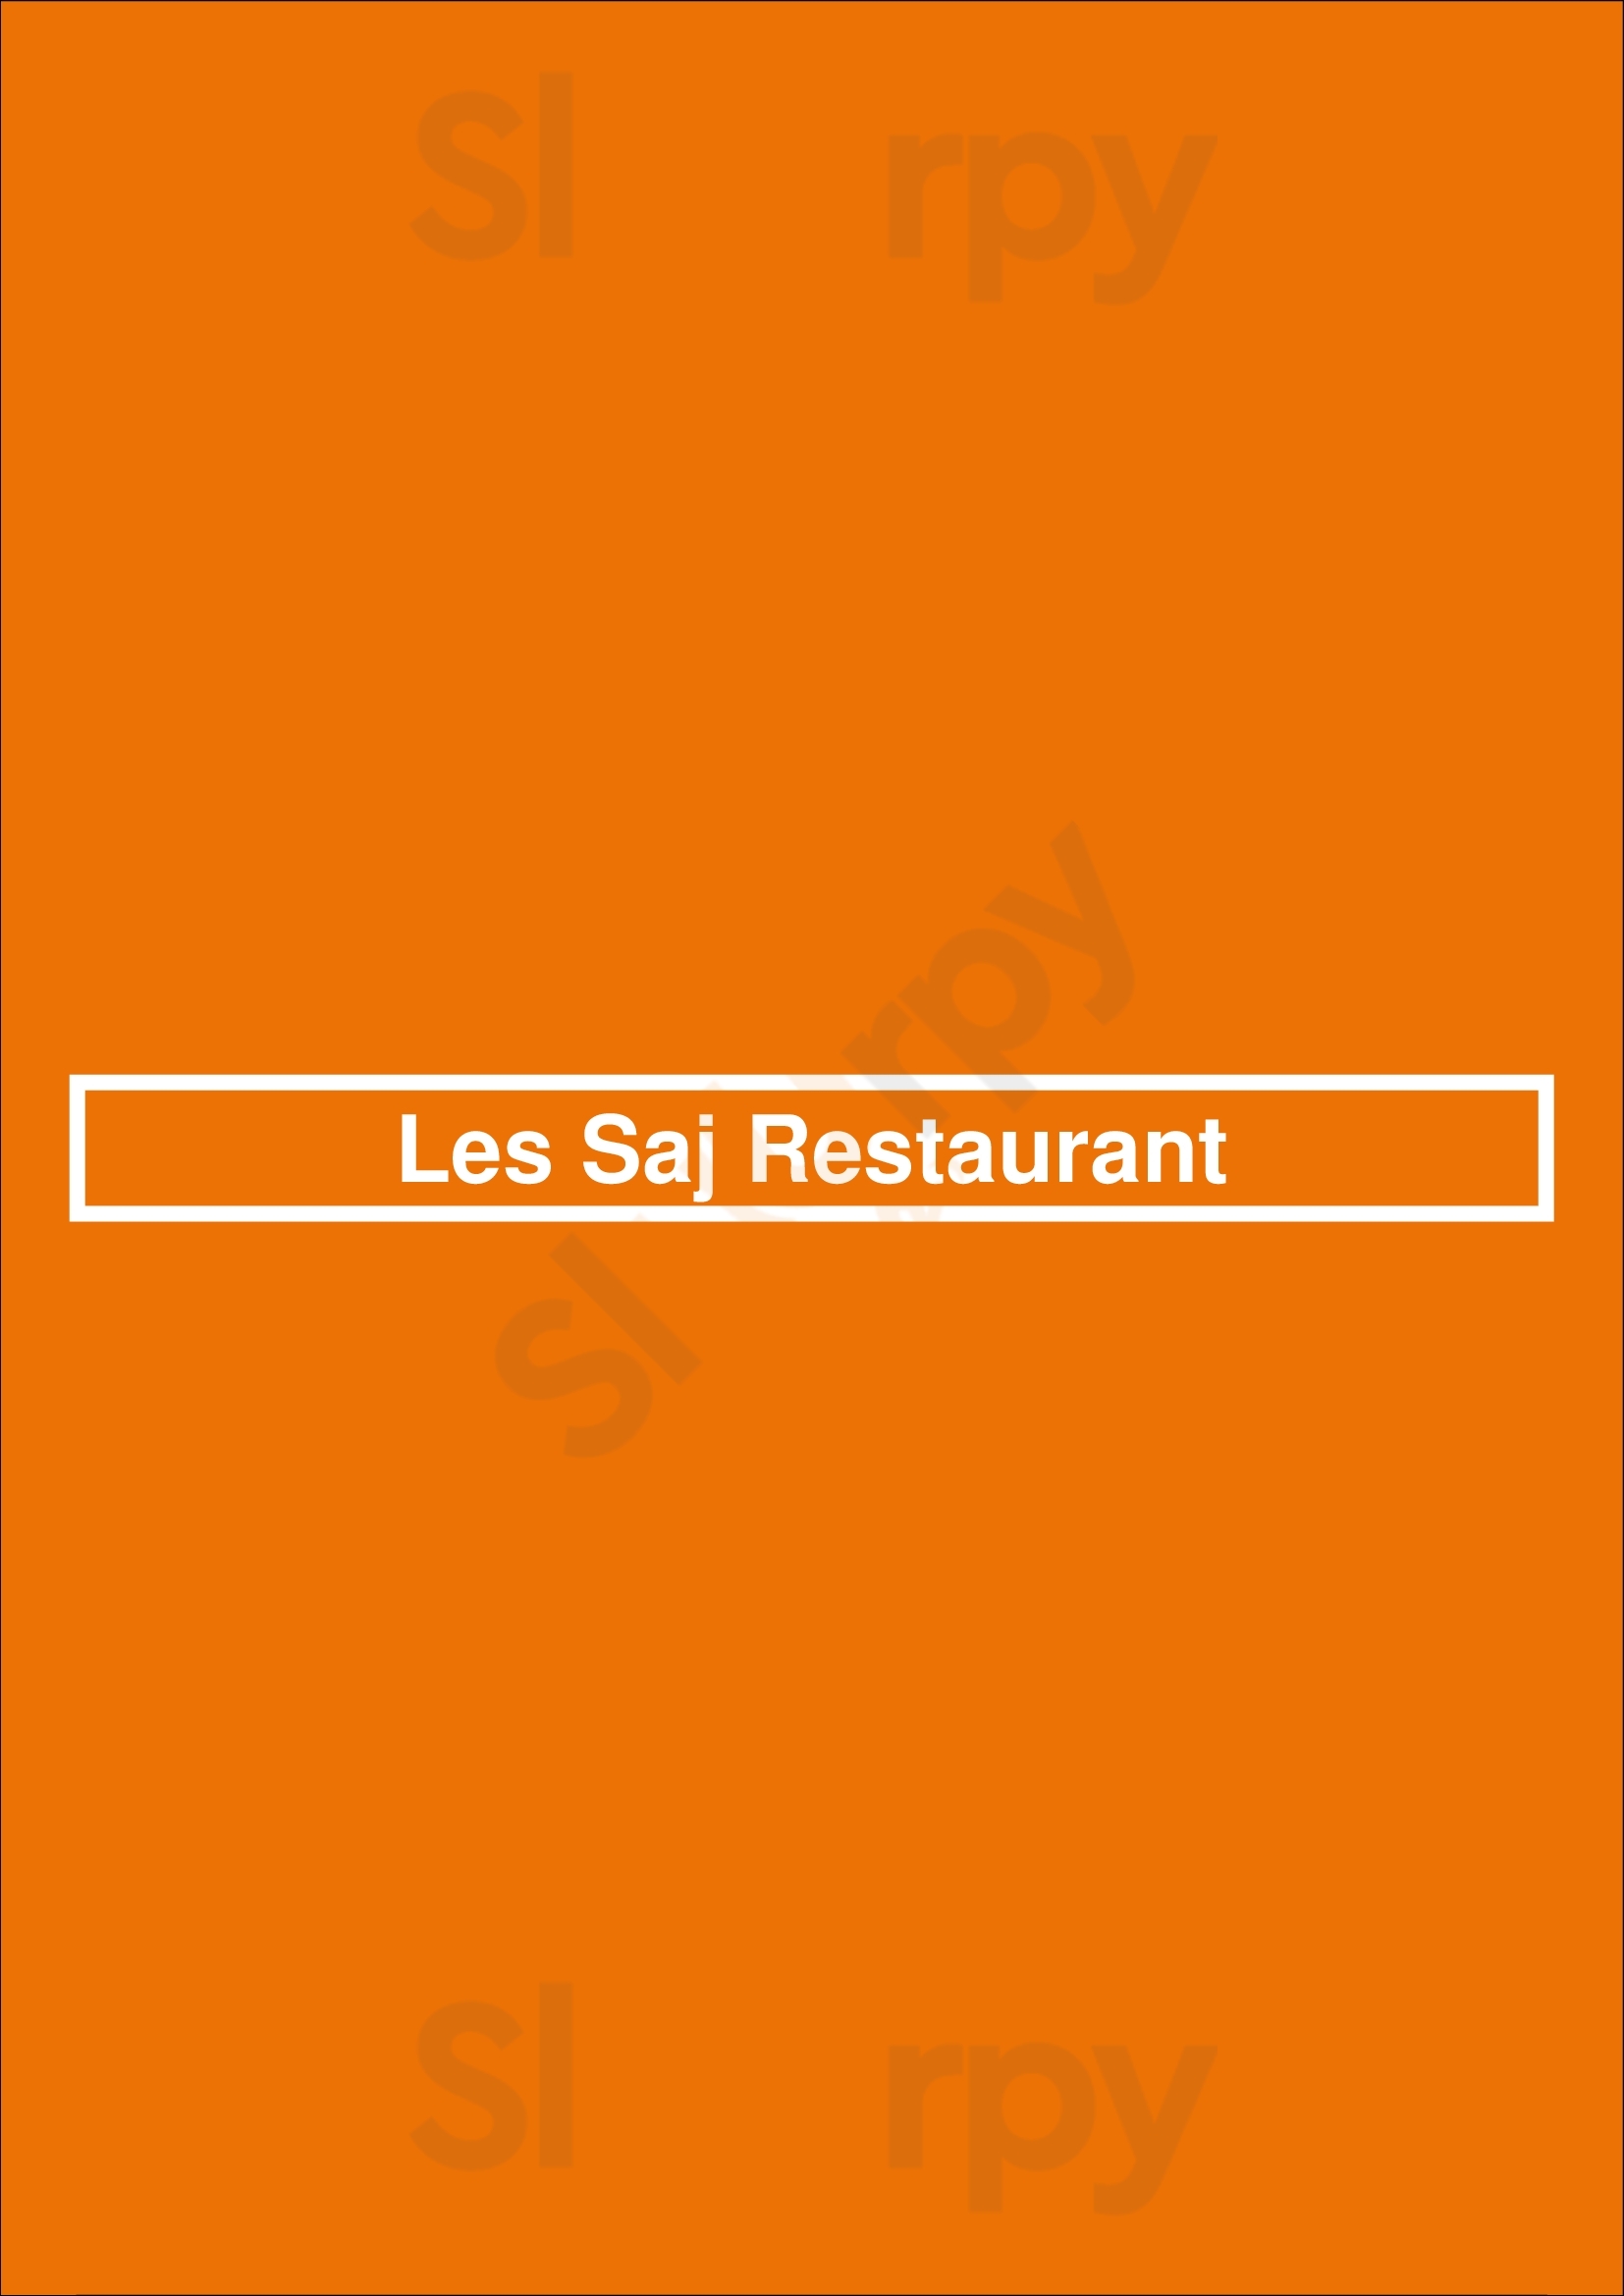 Les Saj Restaurant Winnipeg Menu - 1